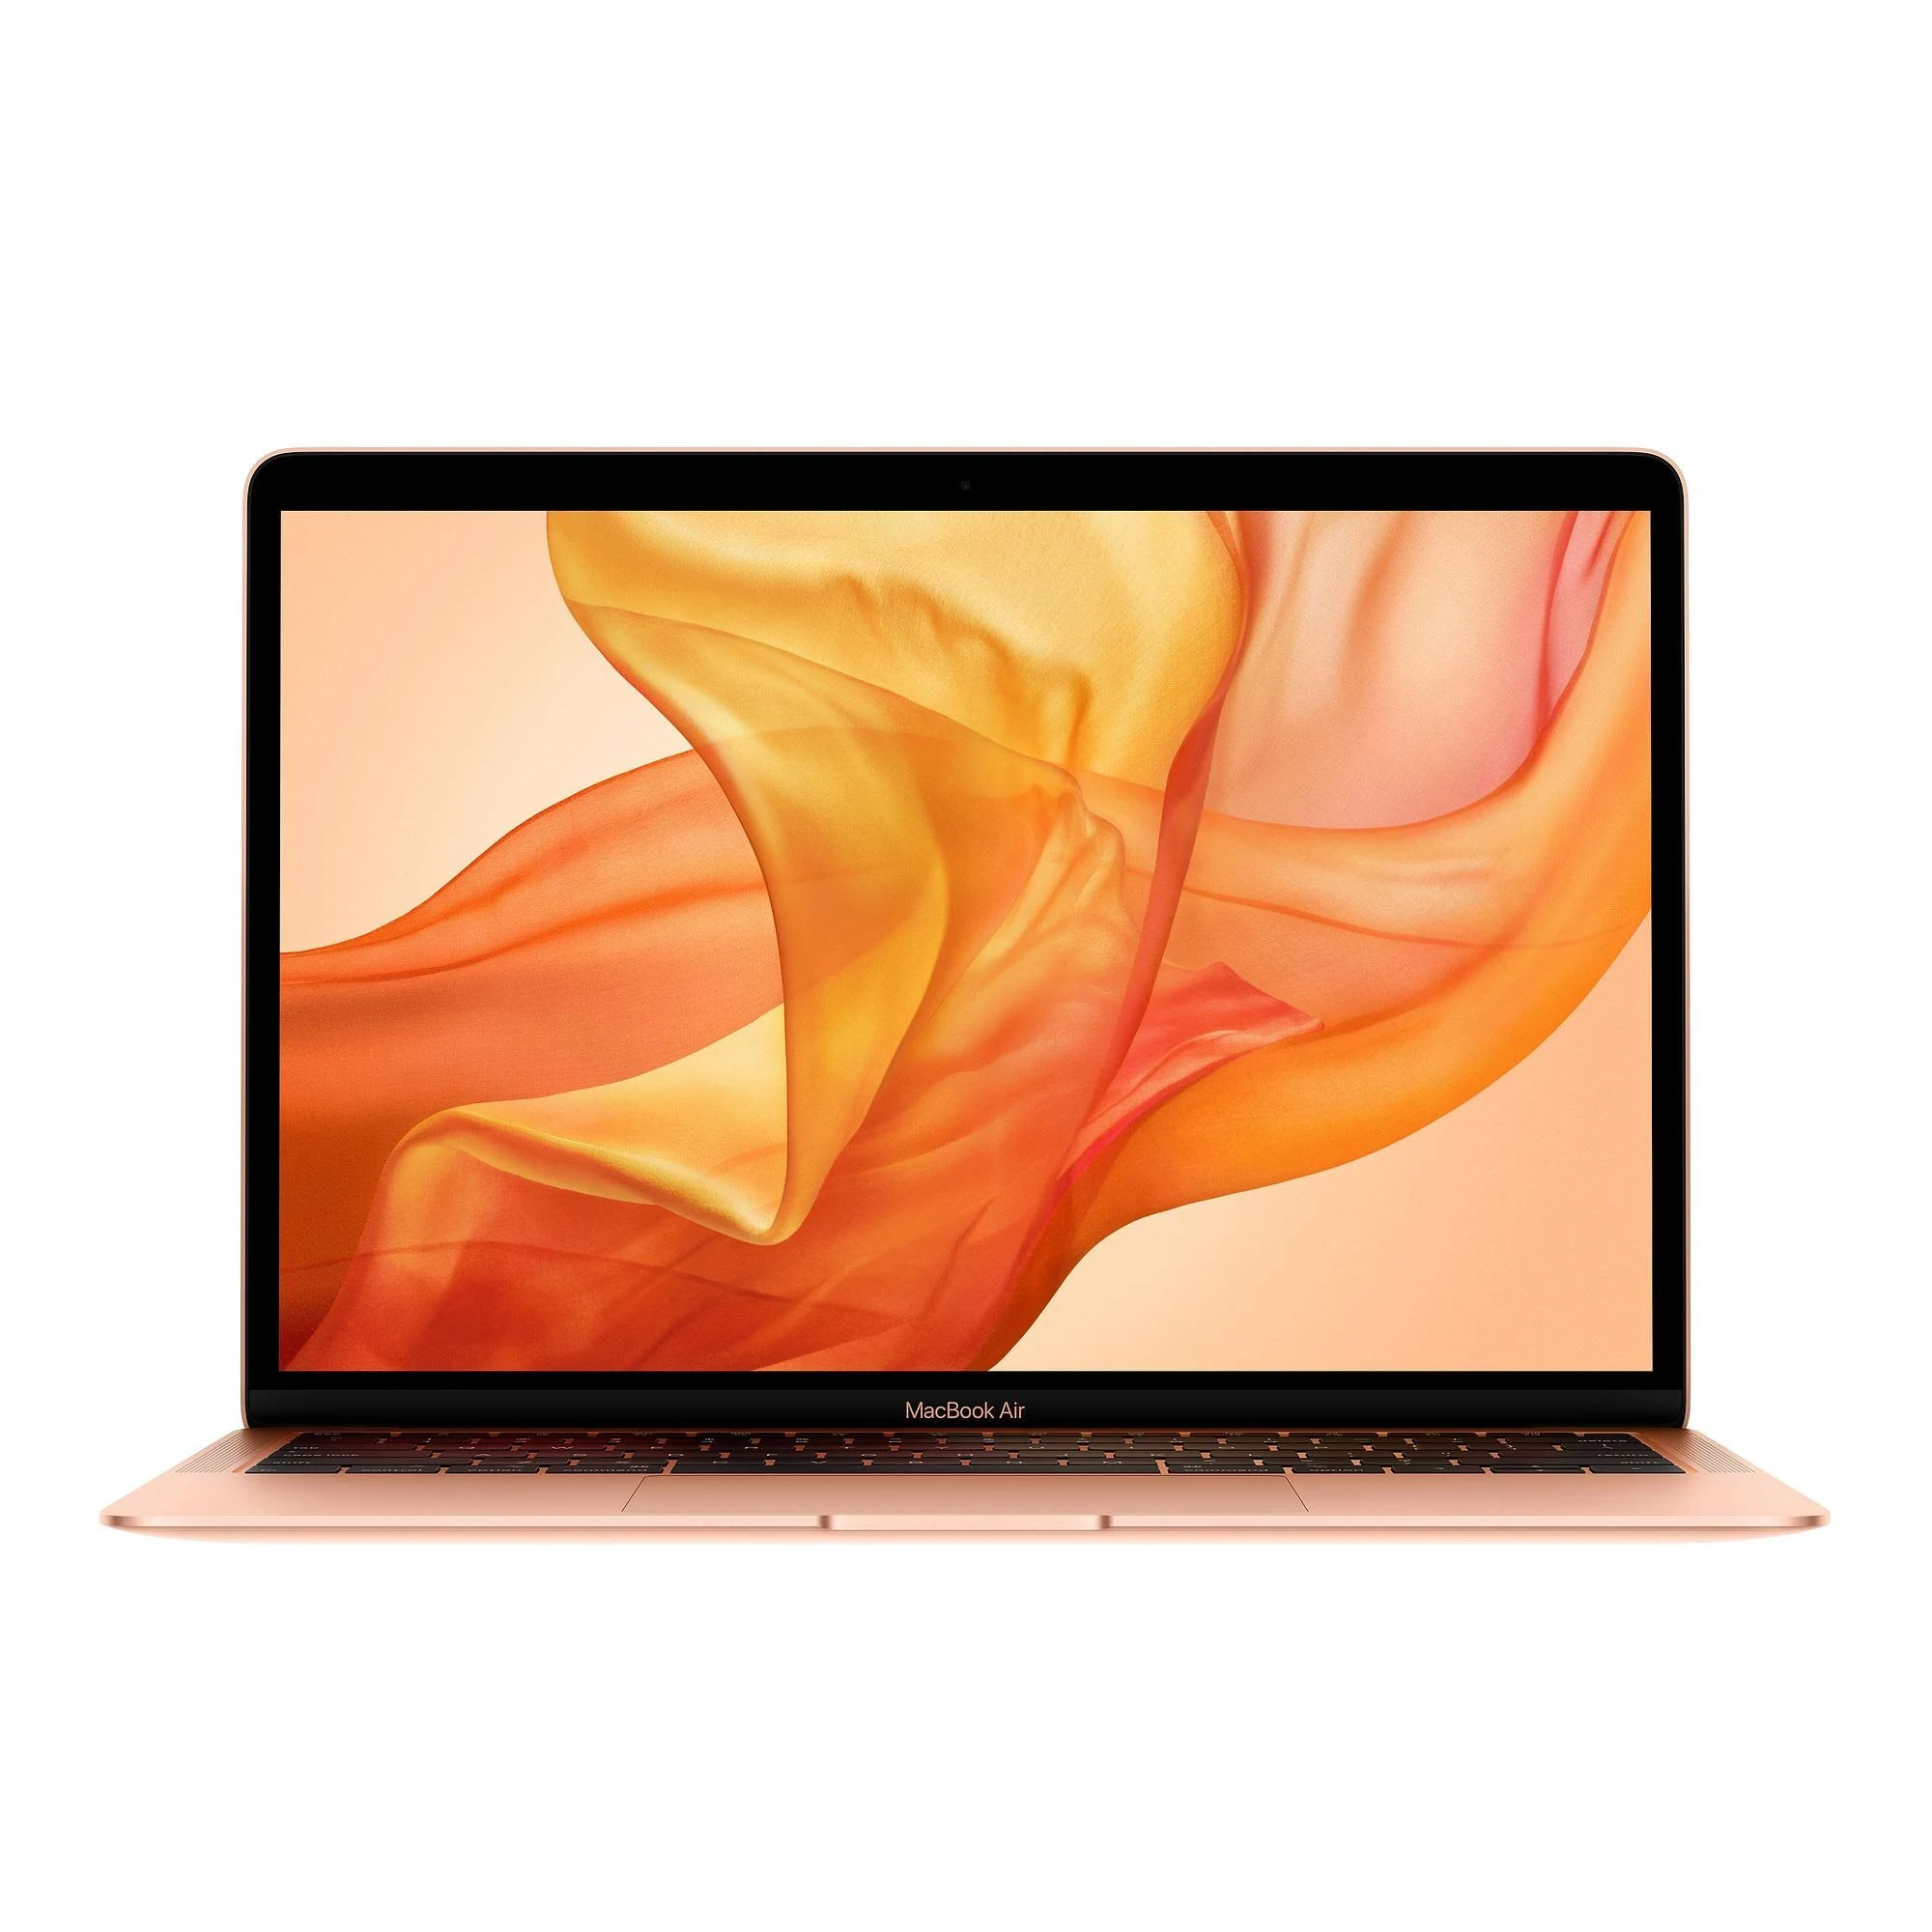 MacBook Air 13 inch True Tone 2019 i5 1.6GHz - 512GB SSD - 8GB Ram 512GB Gold Pristine